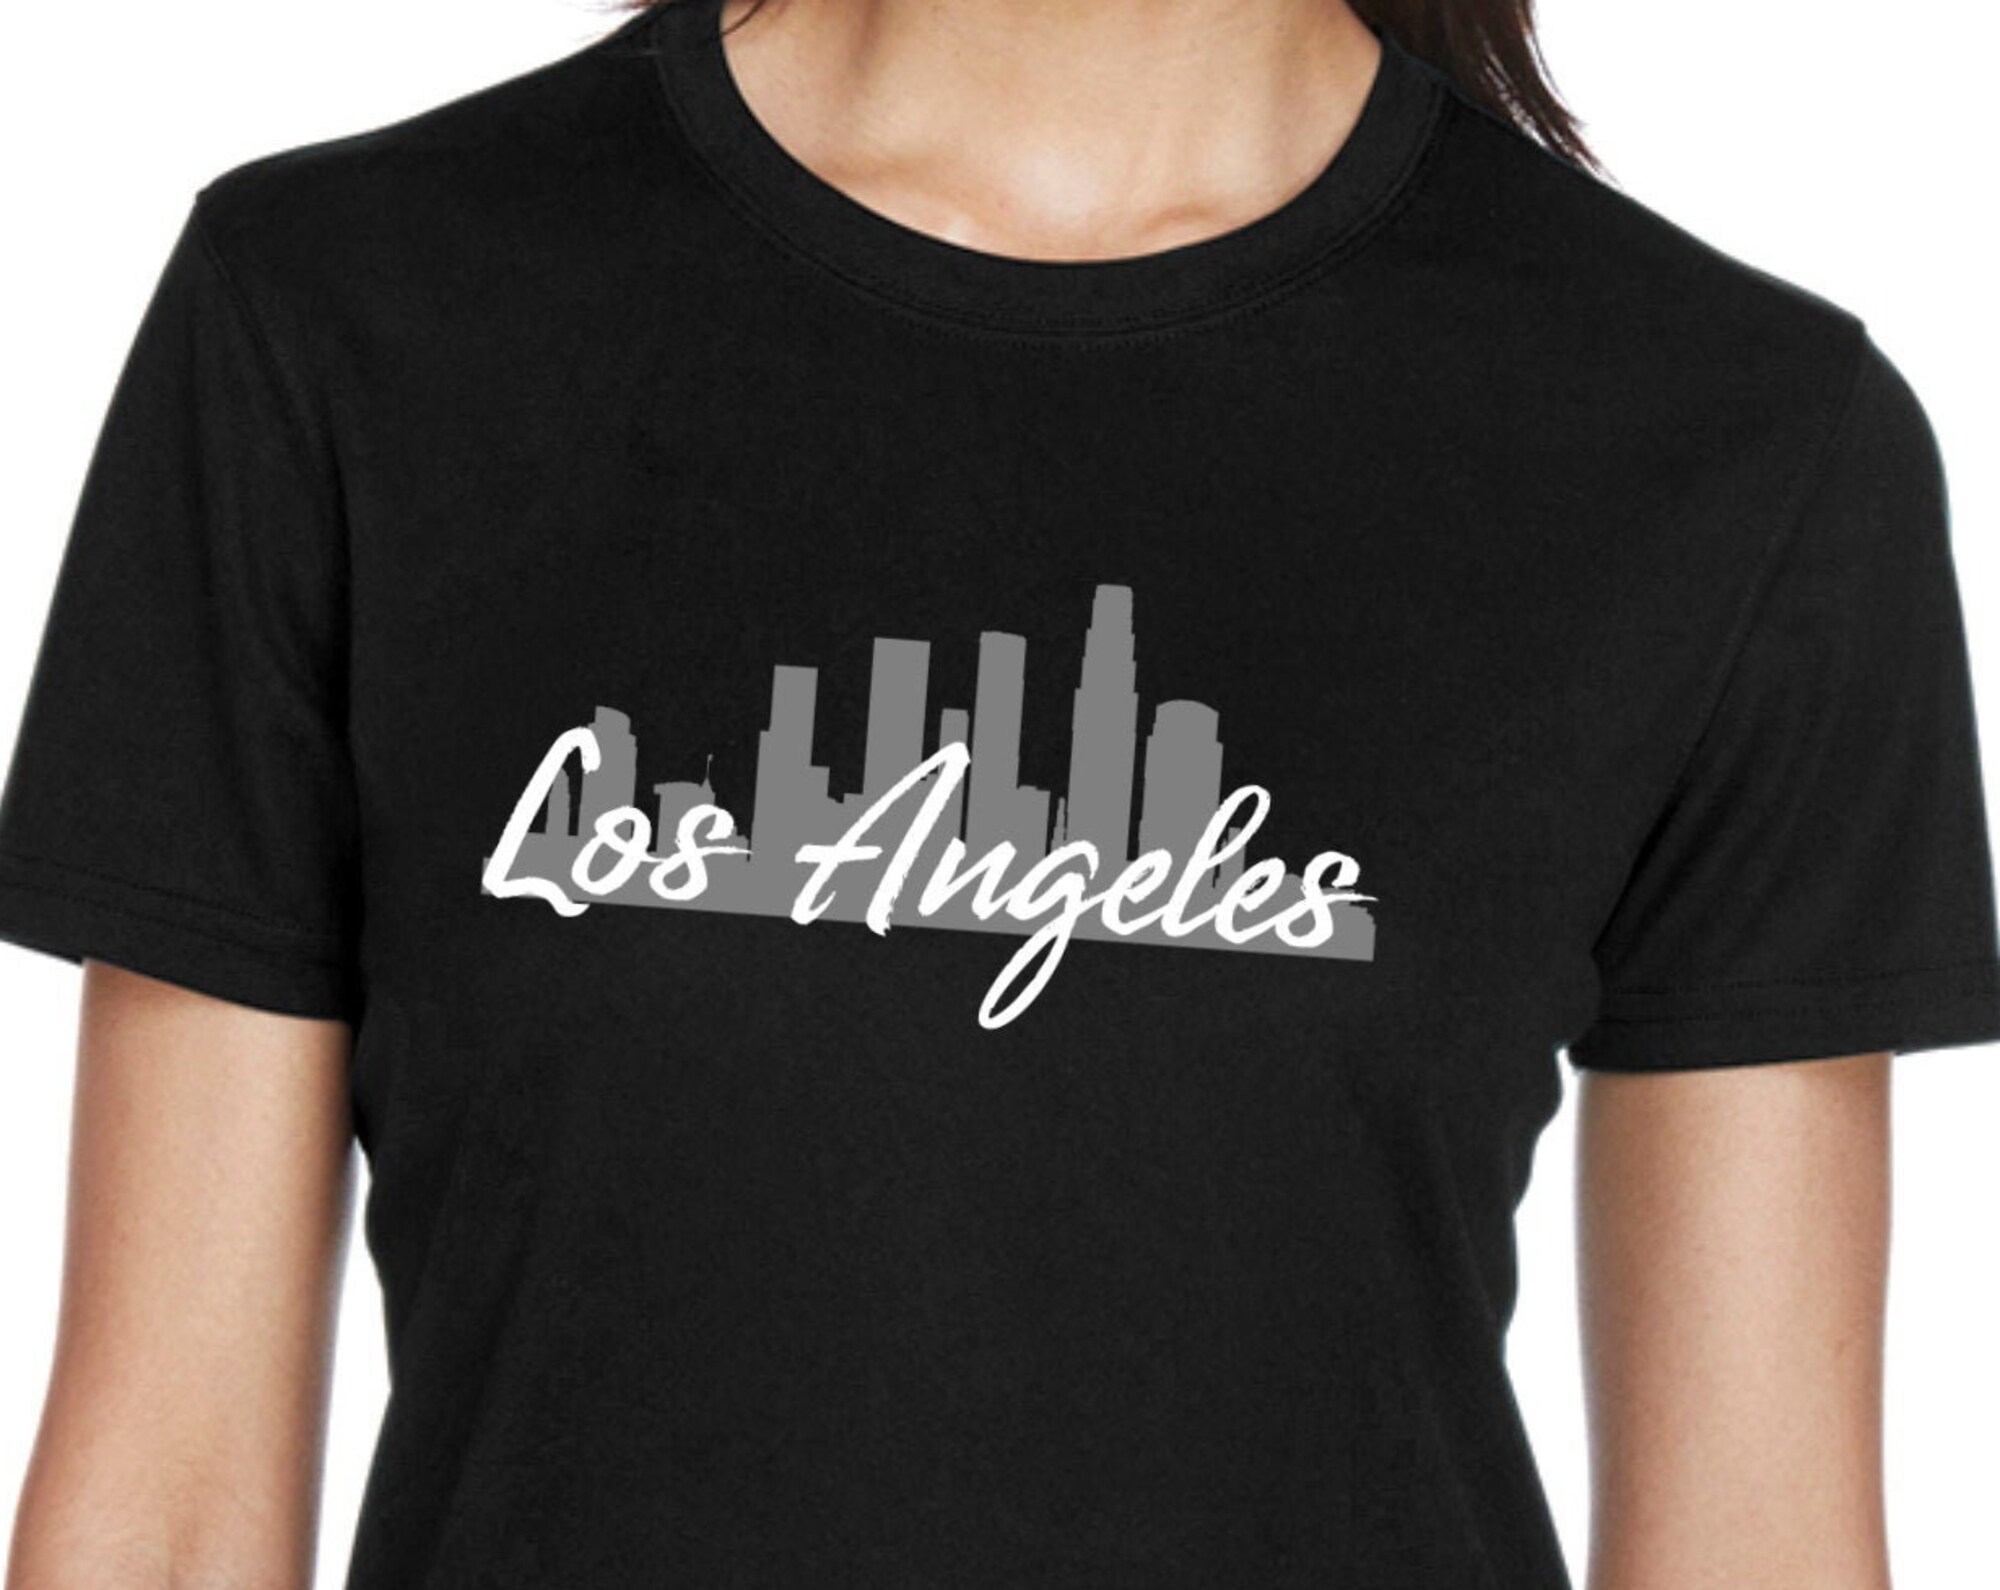 Discover Los Angeles Ladies Shirt Gift, Los Angeles Ladies' shirt